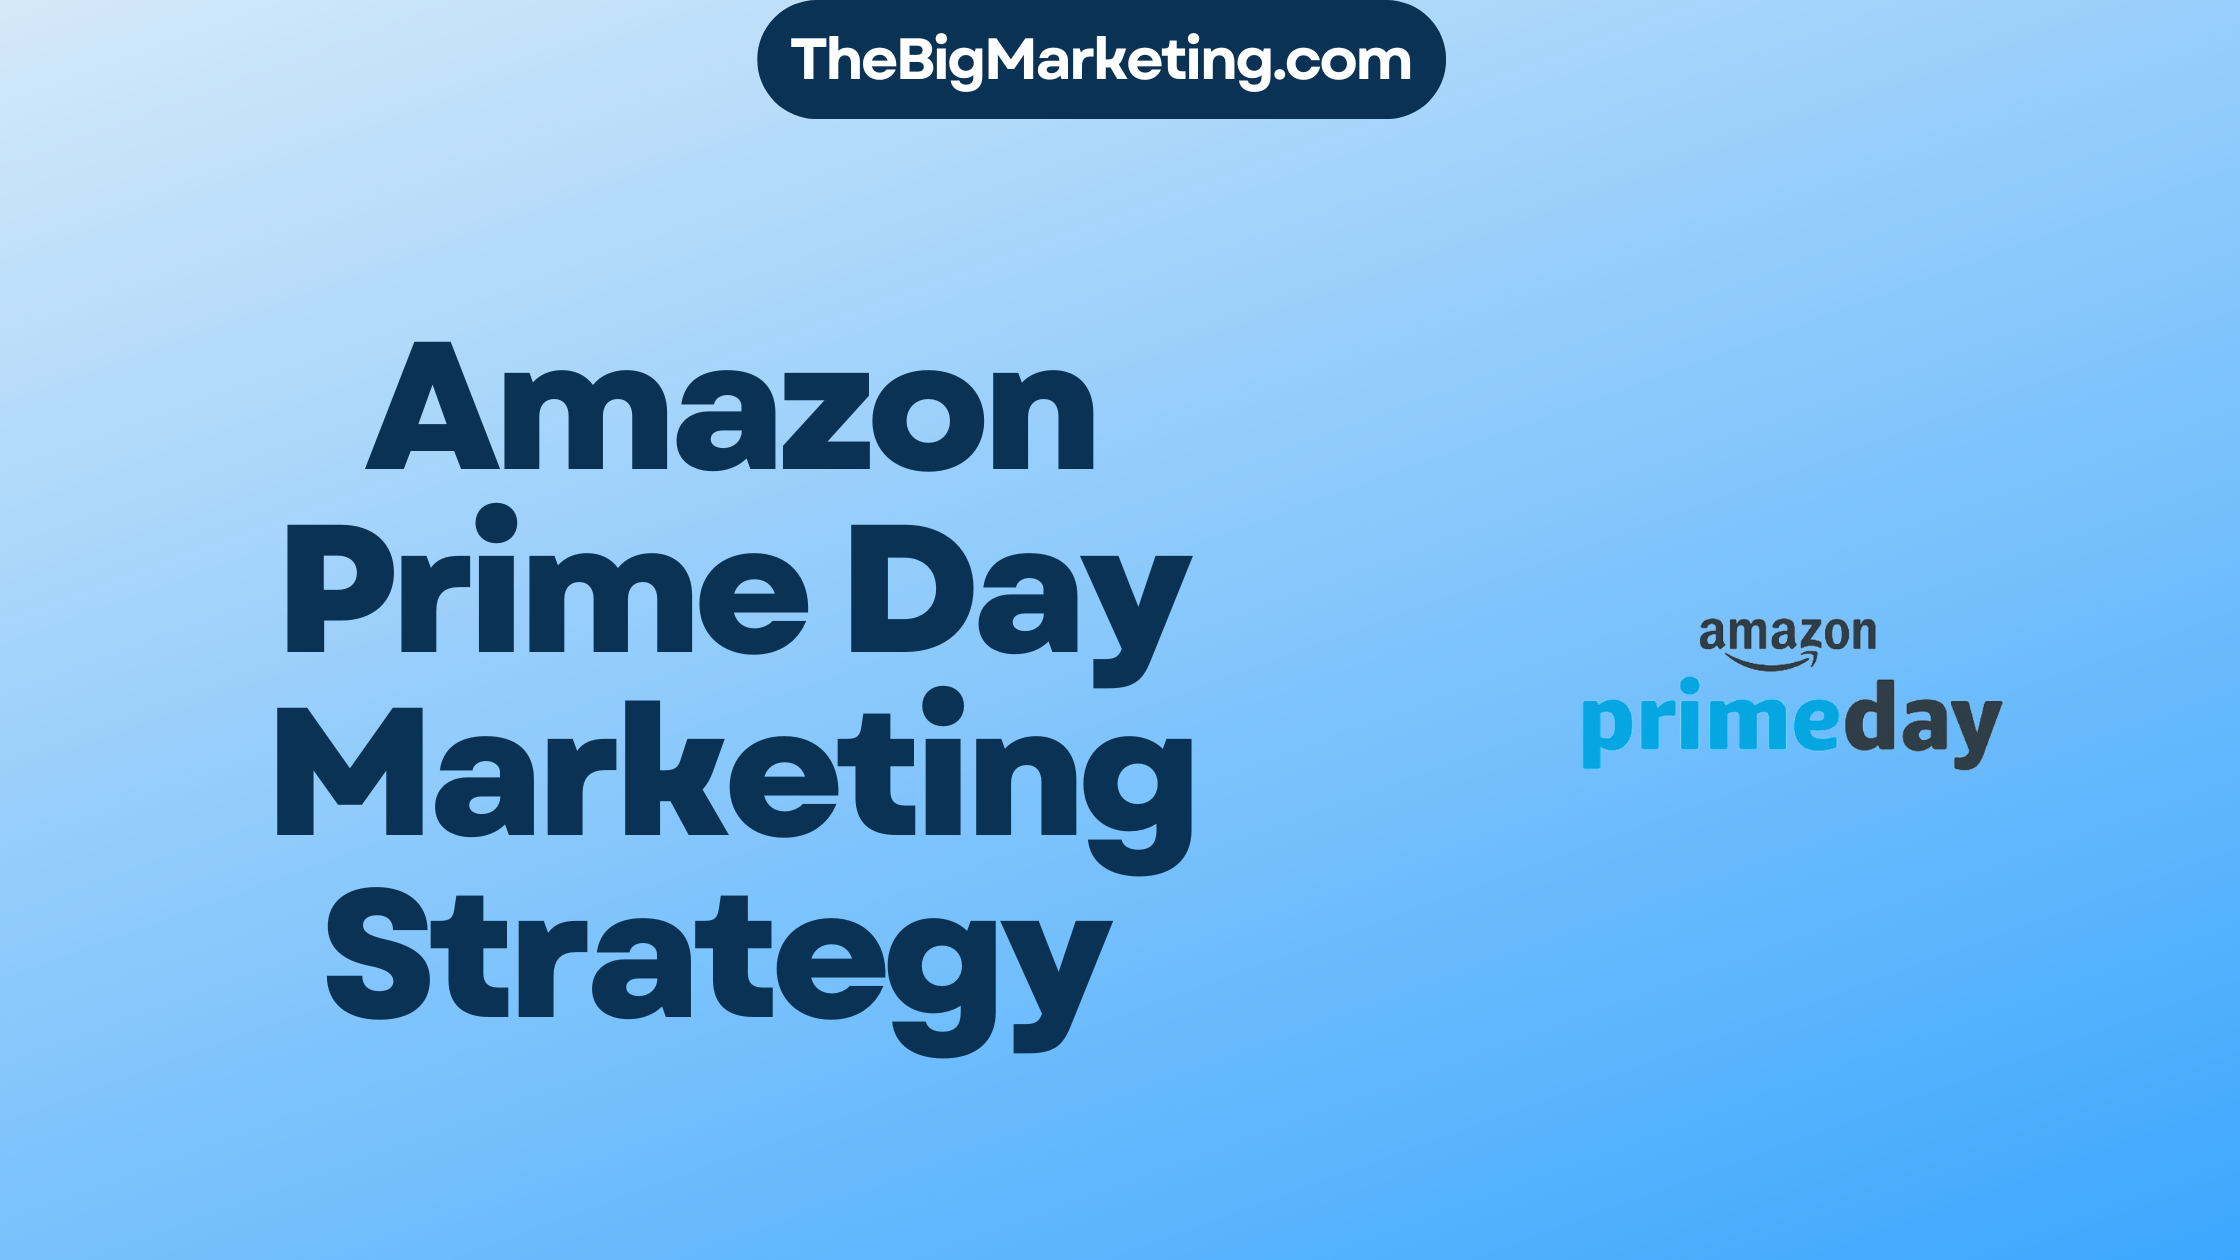 Amazon Prime Day Marketing Strategy